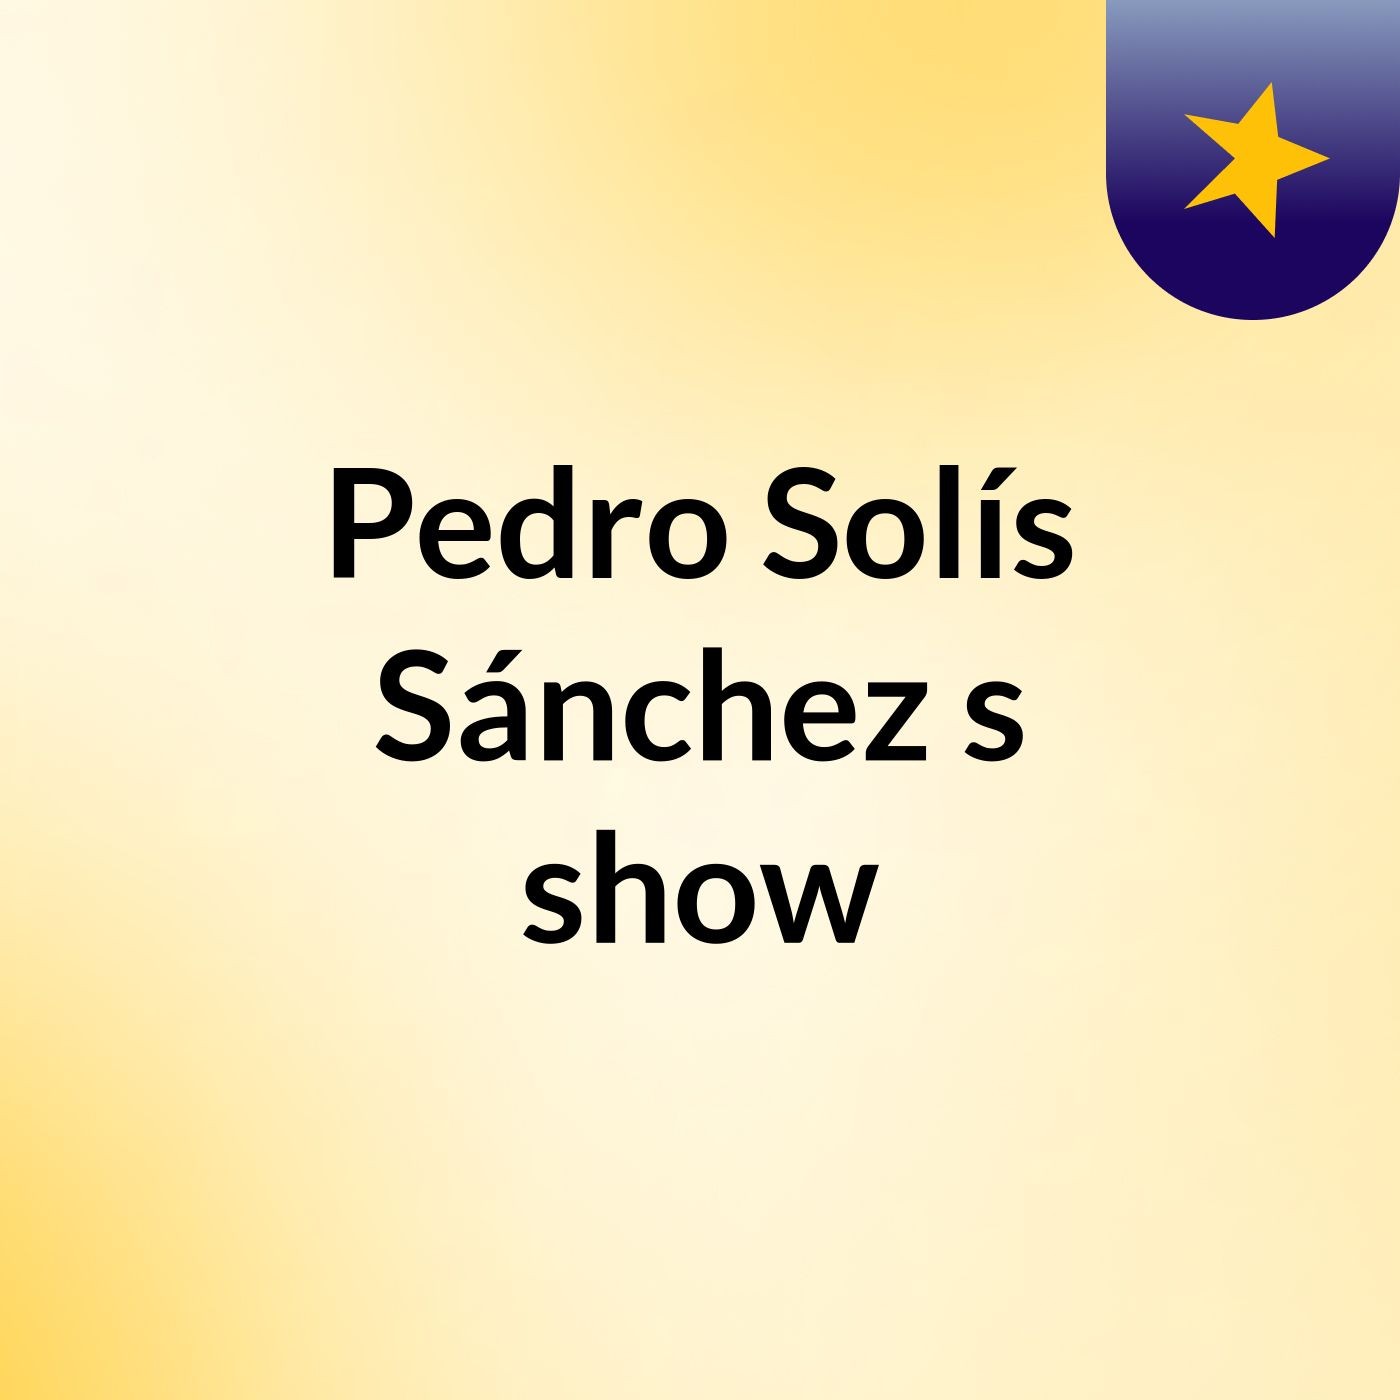 Pedro Solís Sánchez's show